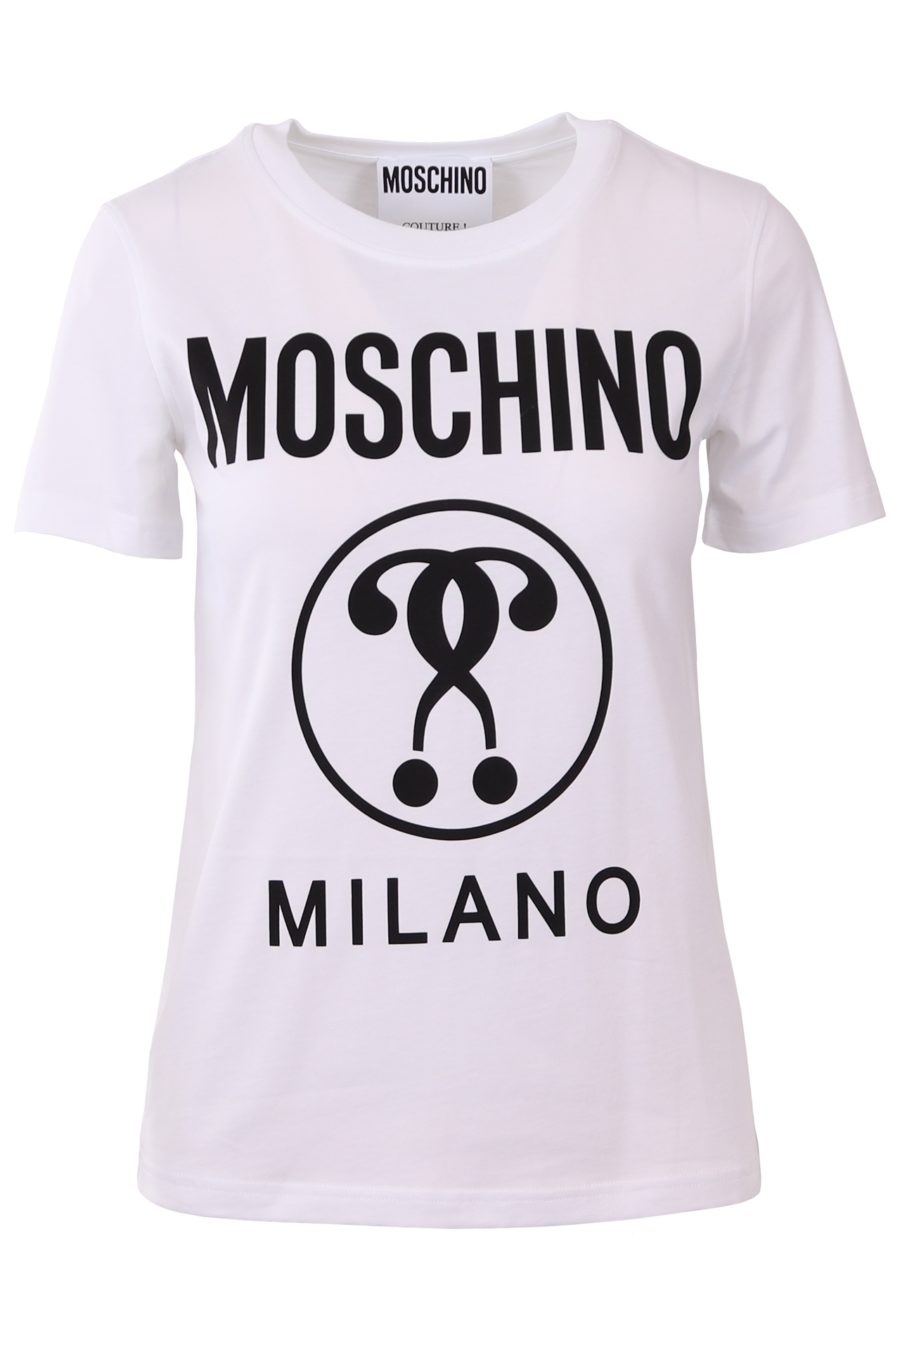 Camiseta Moschino Couture blanca con logo grande milano - 418b69f3fb0dcc551032d181eaf5120709cdee3a